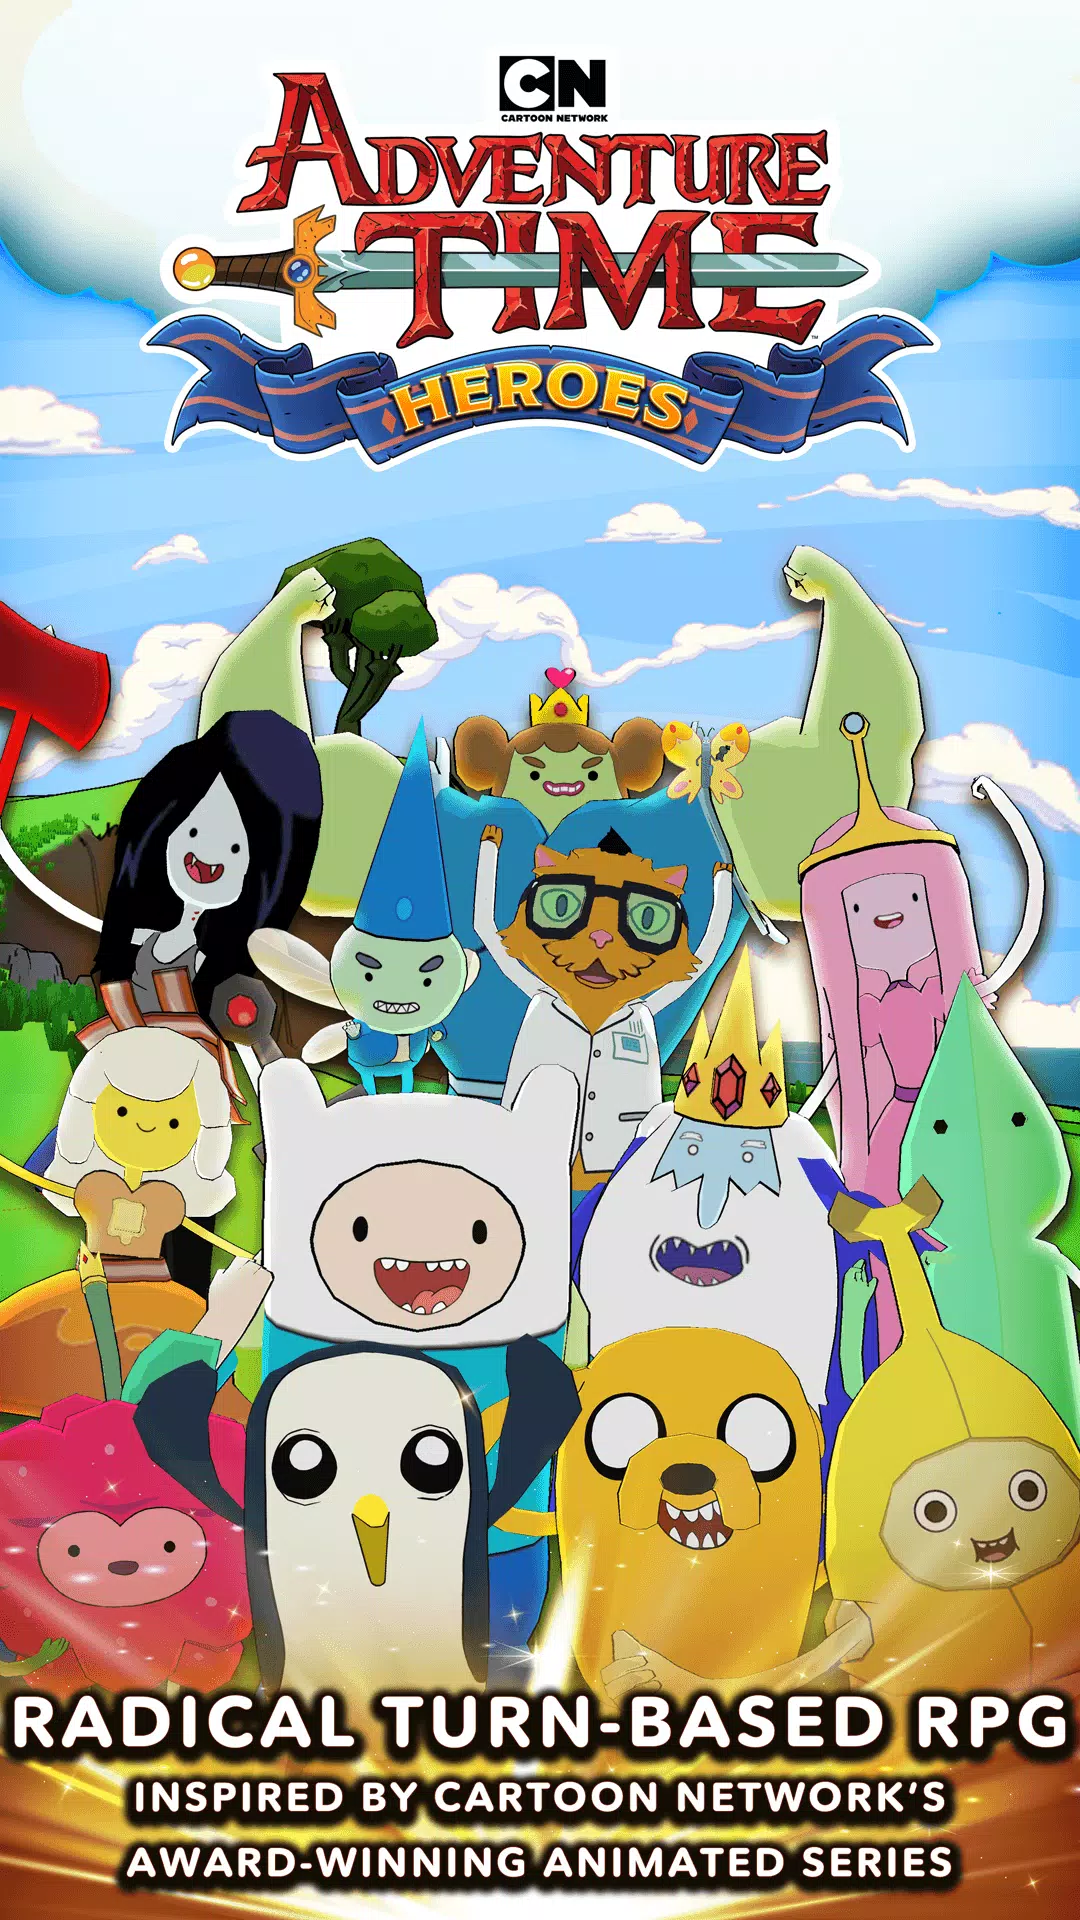 Adventure Time Heroes is a mobile turn-based RPG based on Cartoon